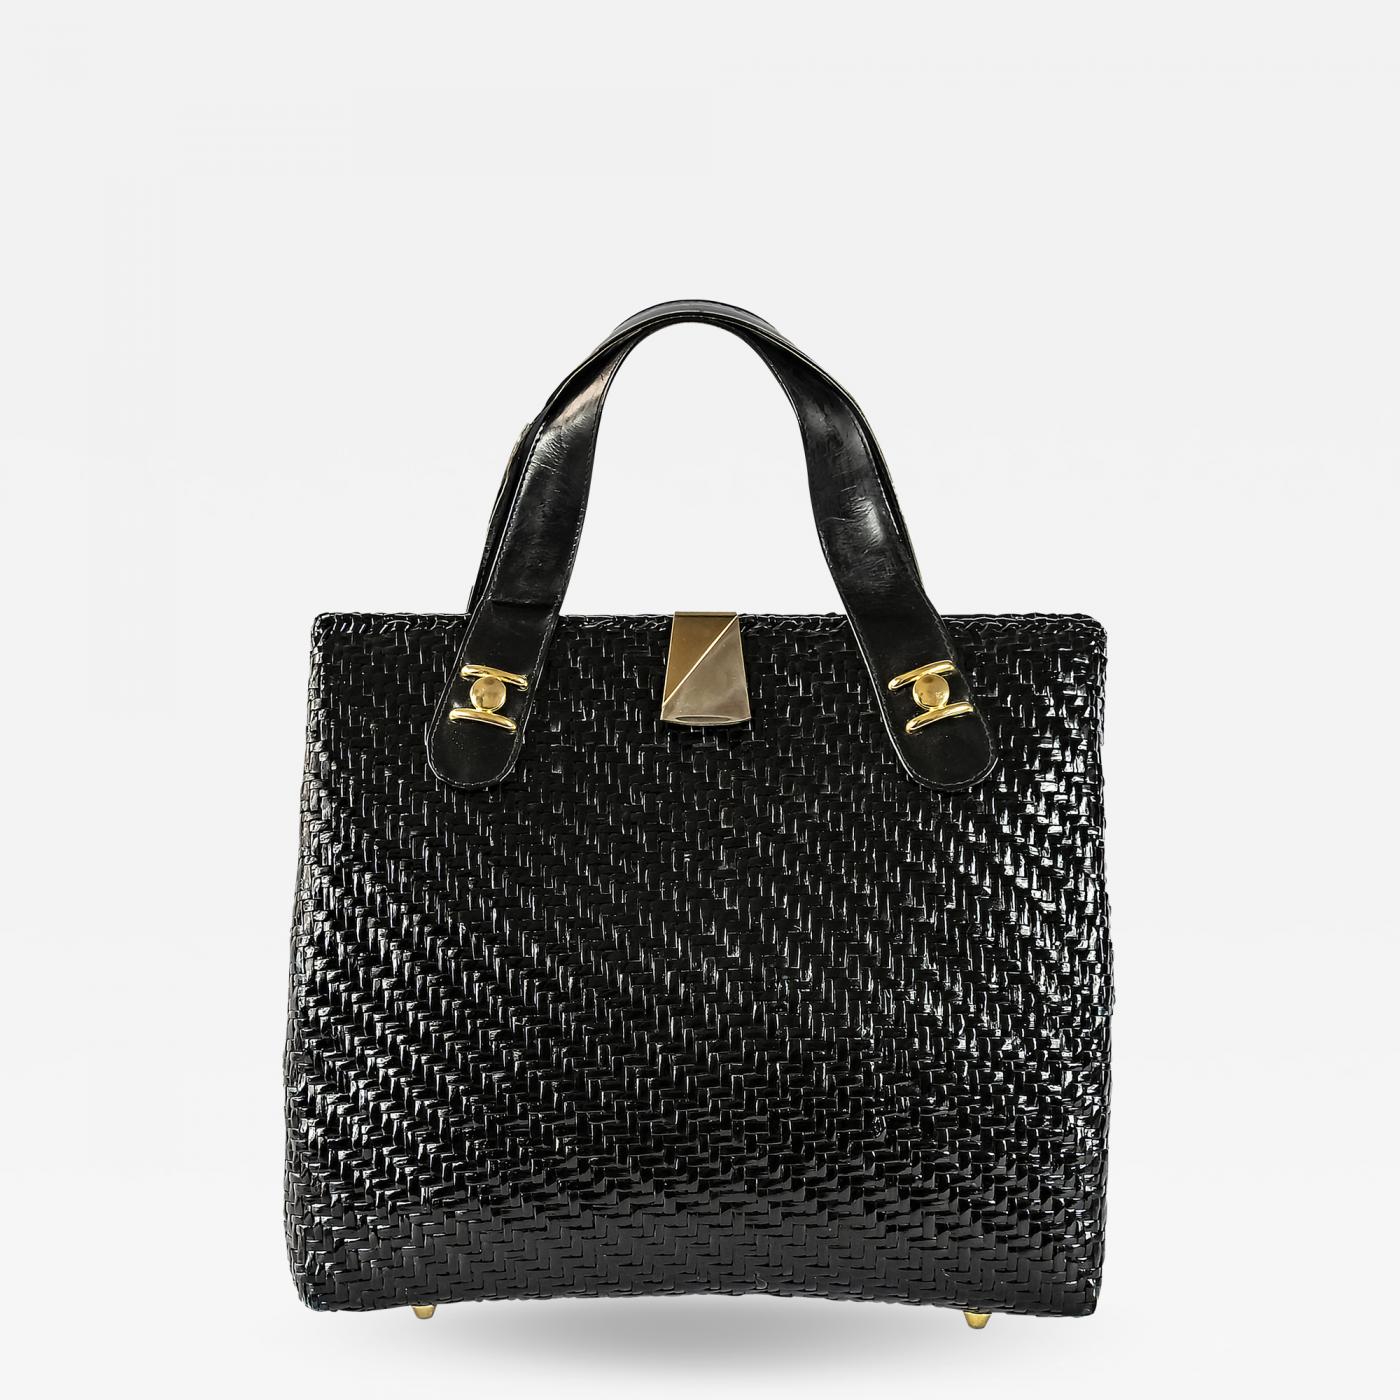 Large Vintage Chaps Brand Black and Brown Leather Tote Style Handbag P –  Shop Cool Vintage Decor